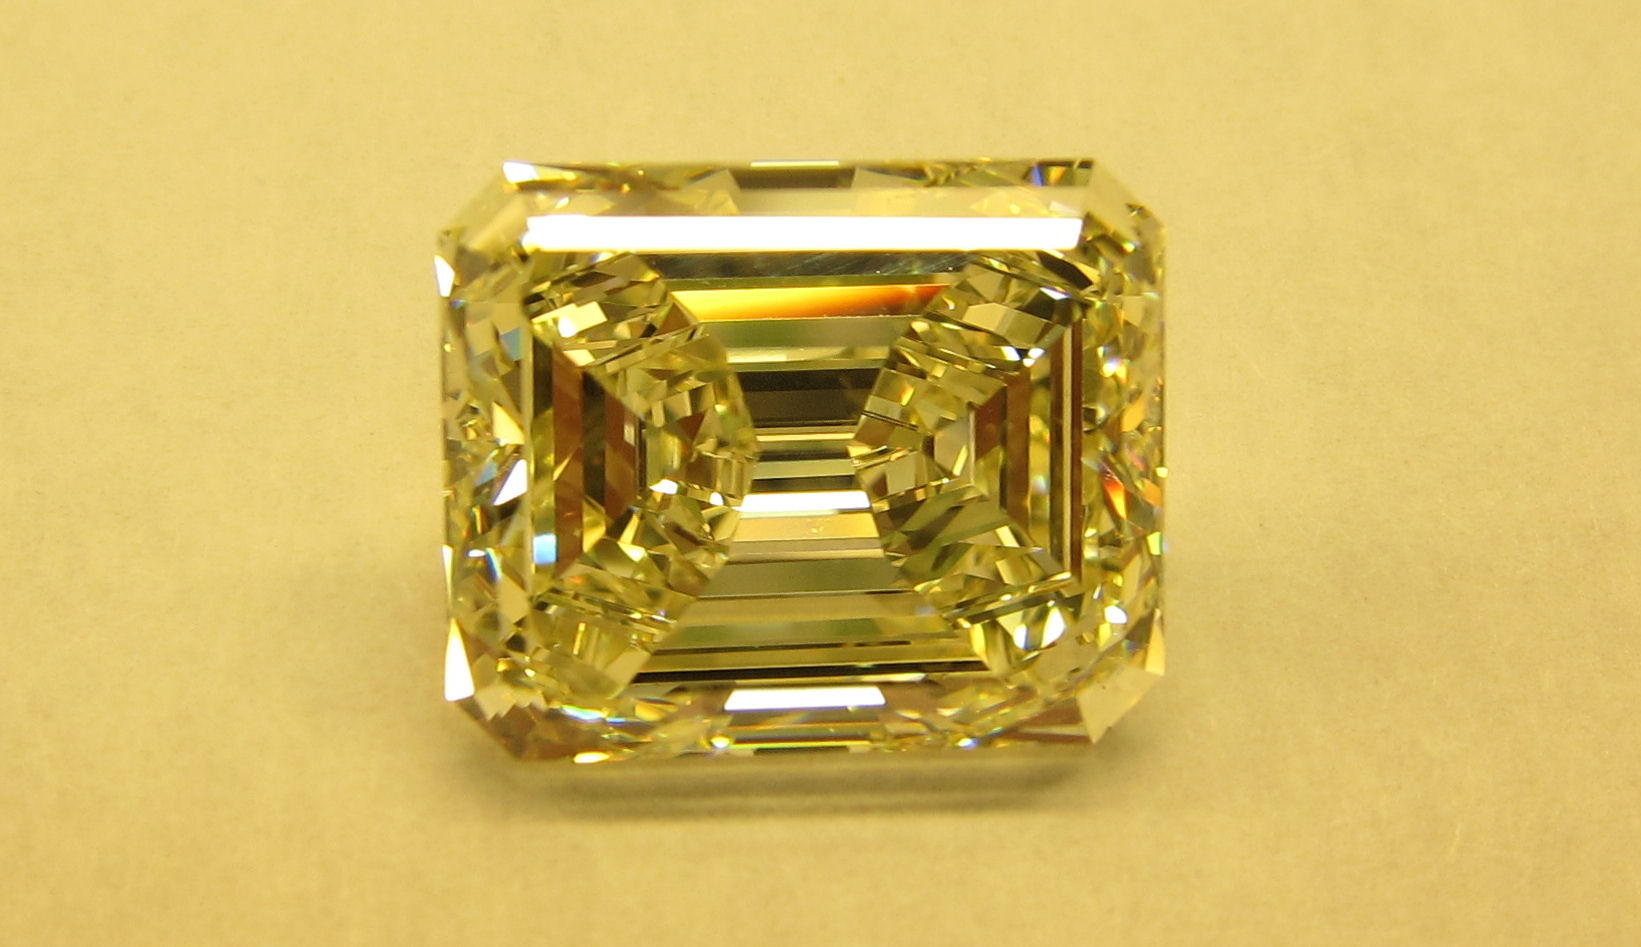 gem type diamond t carat weight 7 86 ct total weight cut very good 